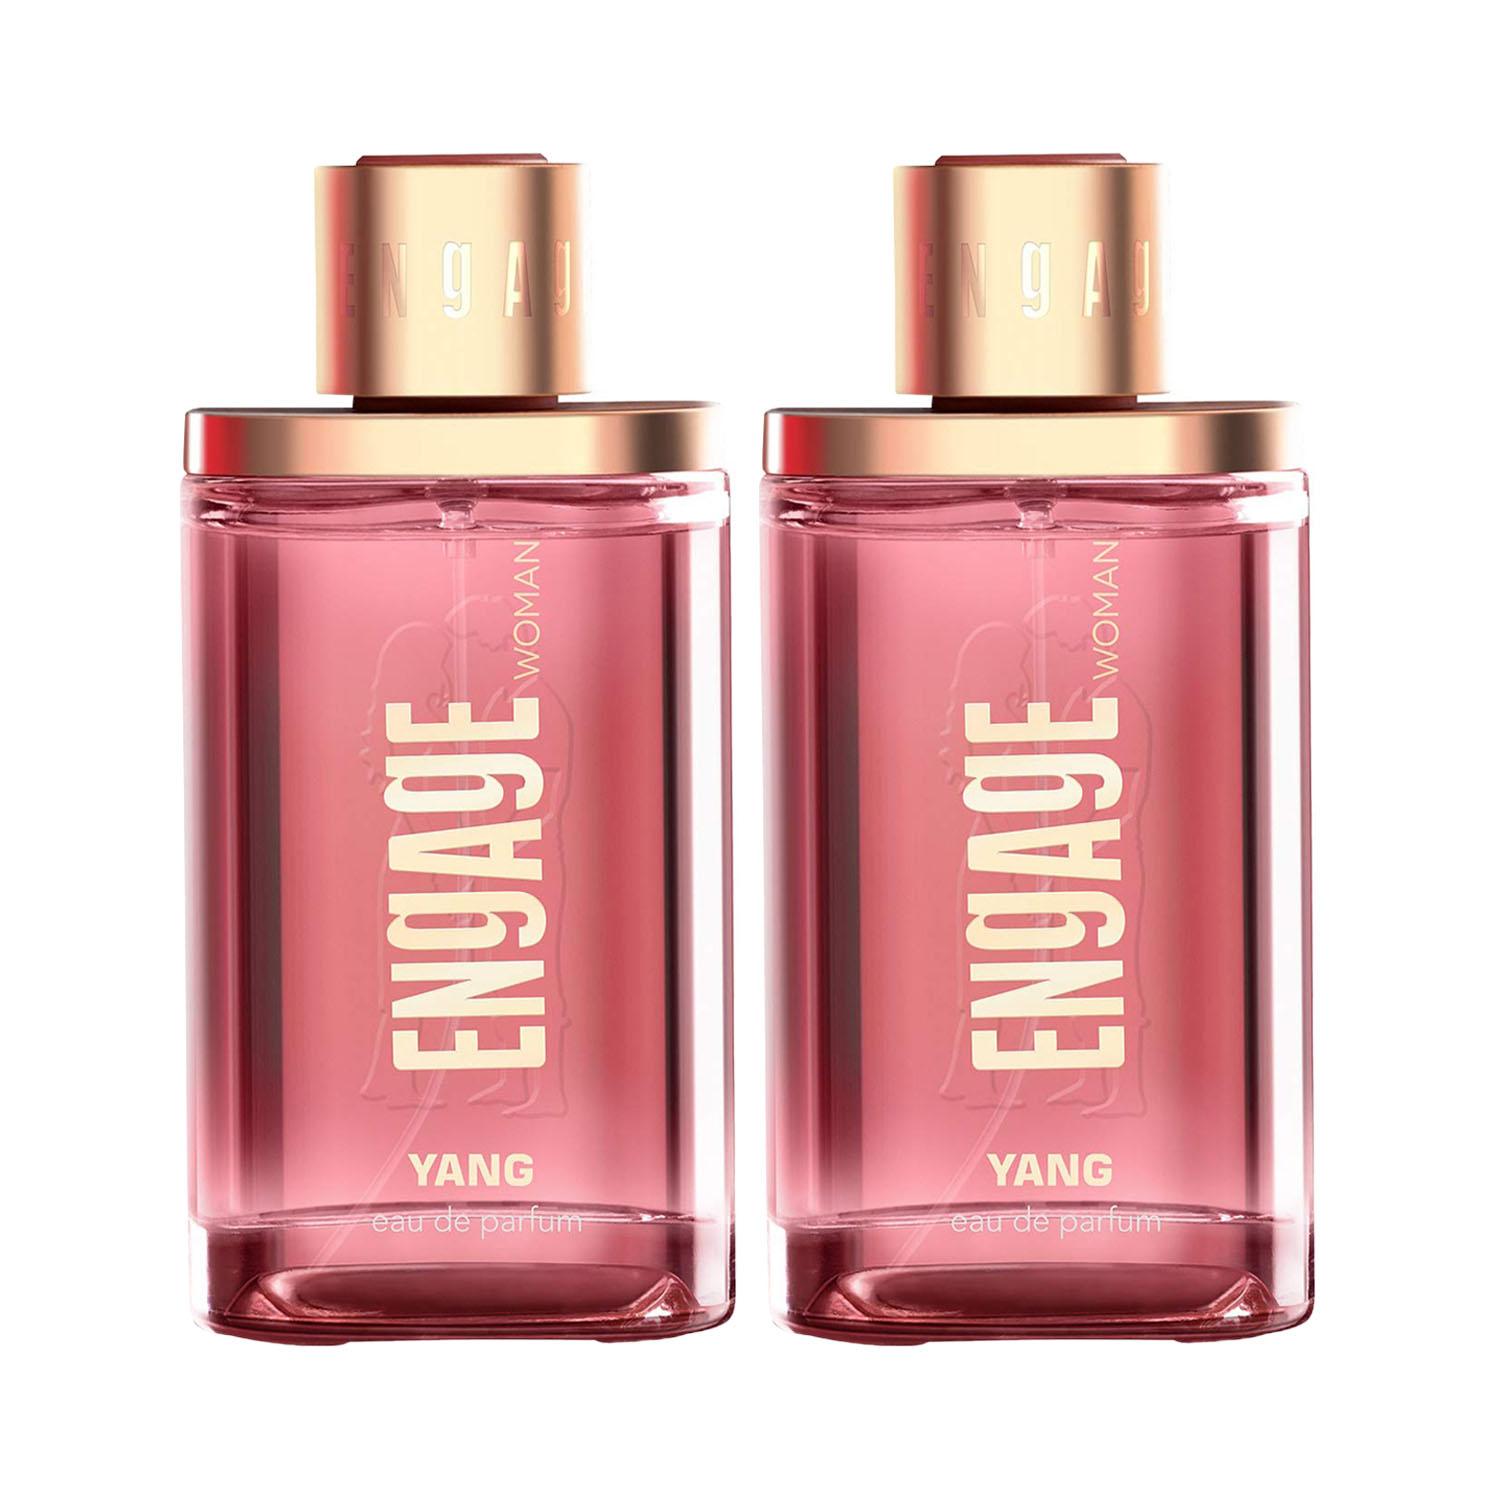 Engage | Engage Premium Perfume Combo Woman (Yang)